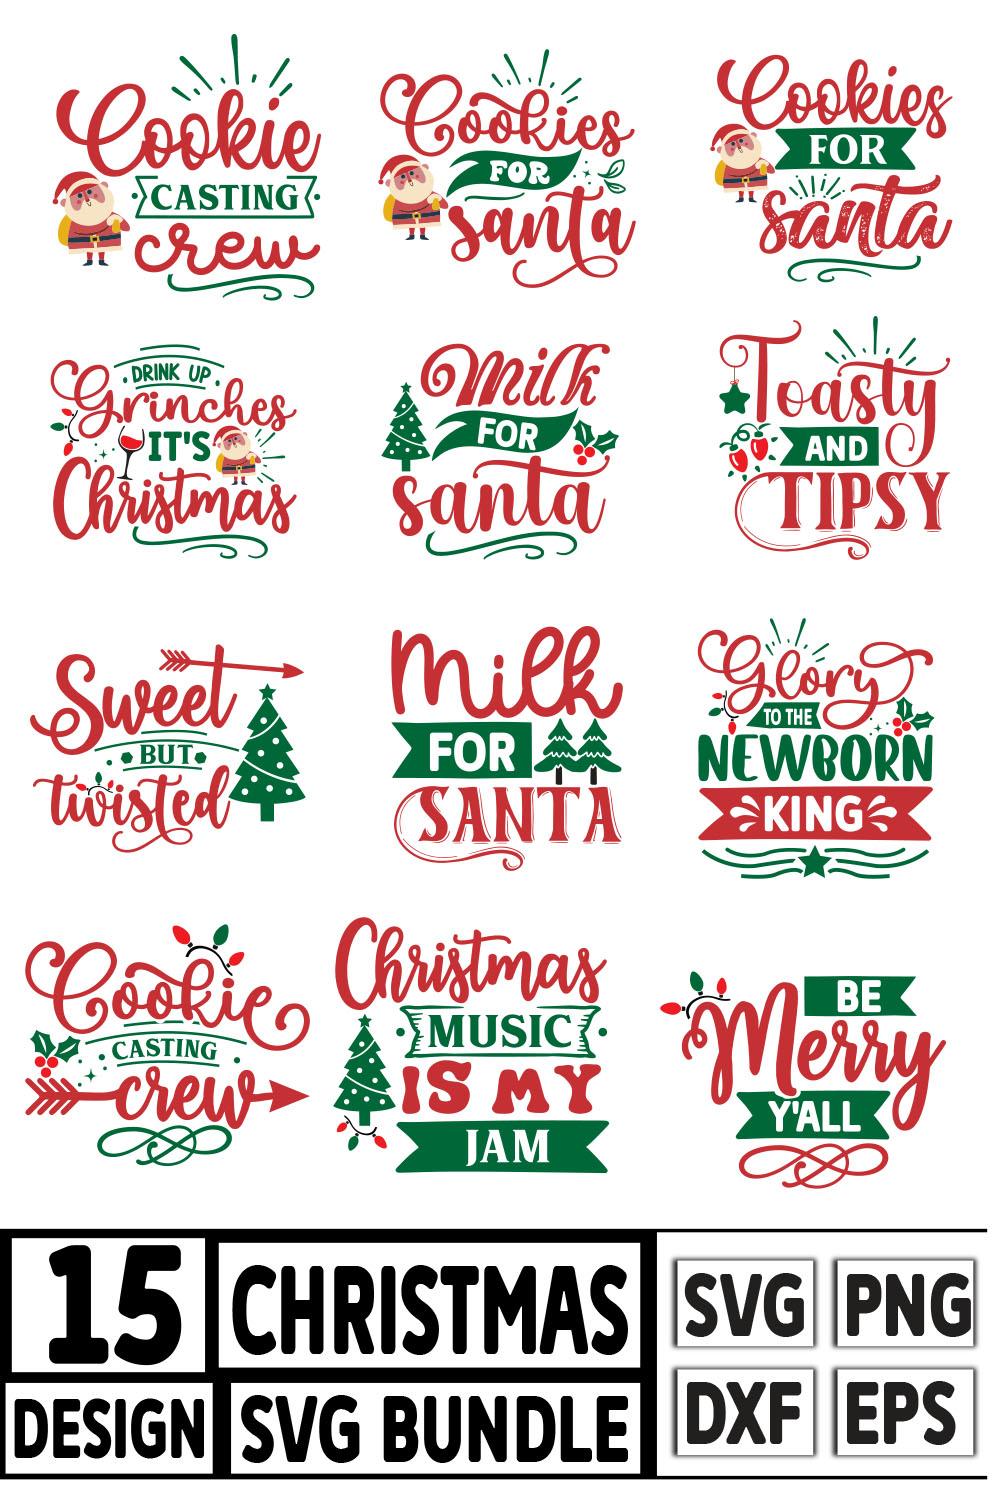 Christmas SVG Bundle - pinterest image preview.